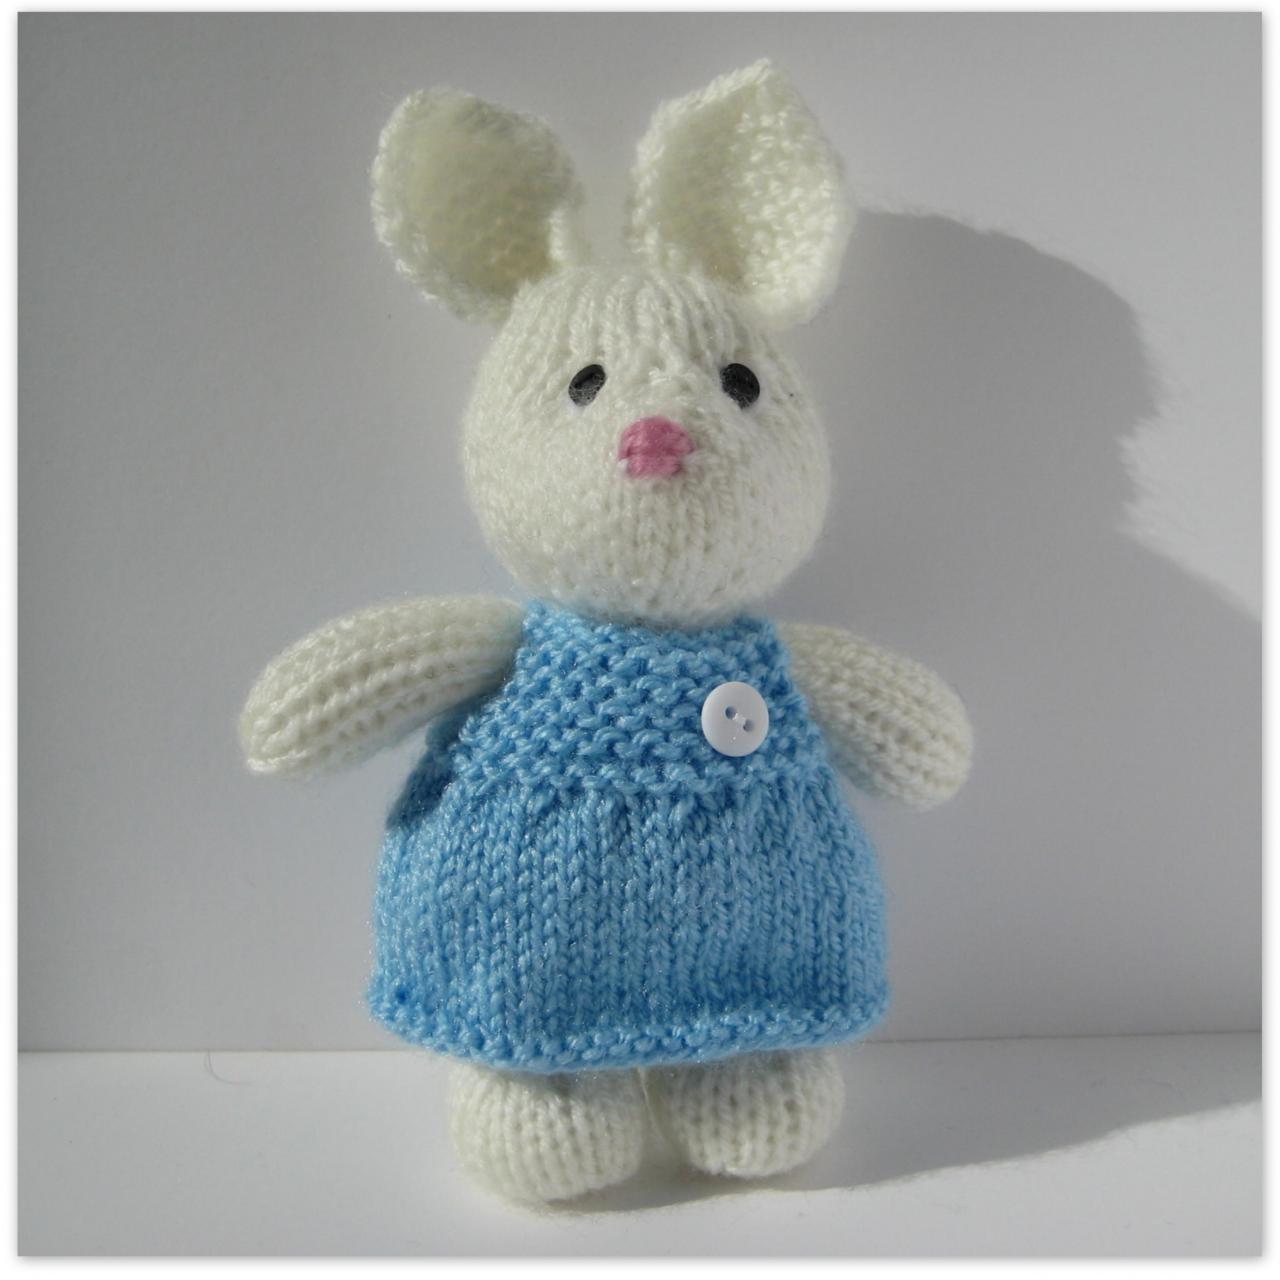 Millie the Rabbit toy knitting pattern